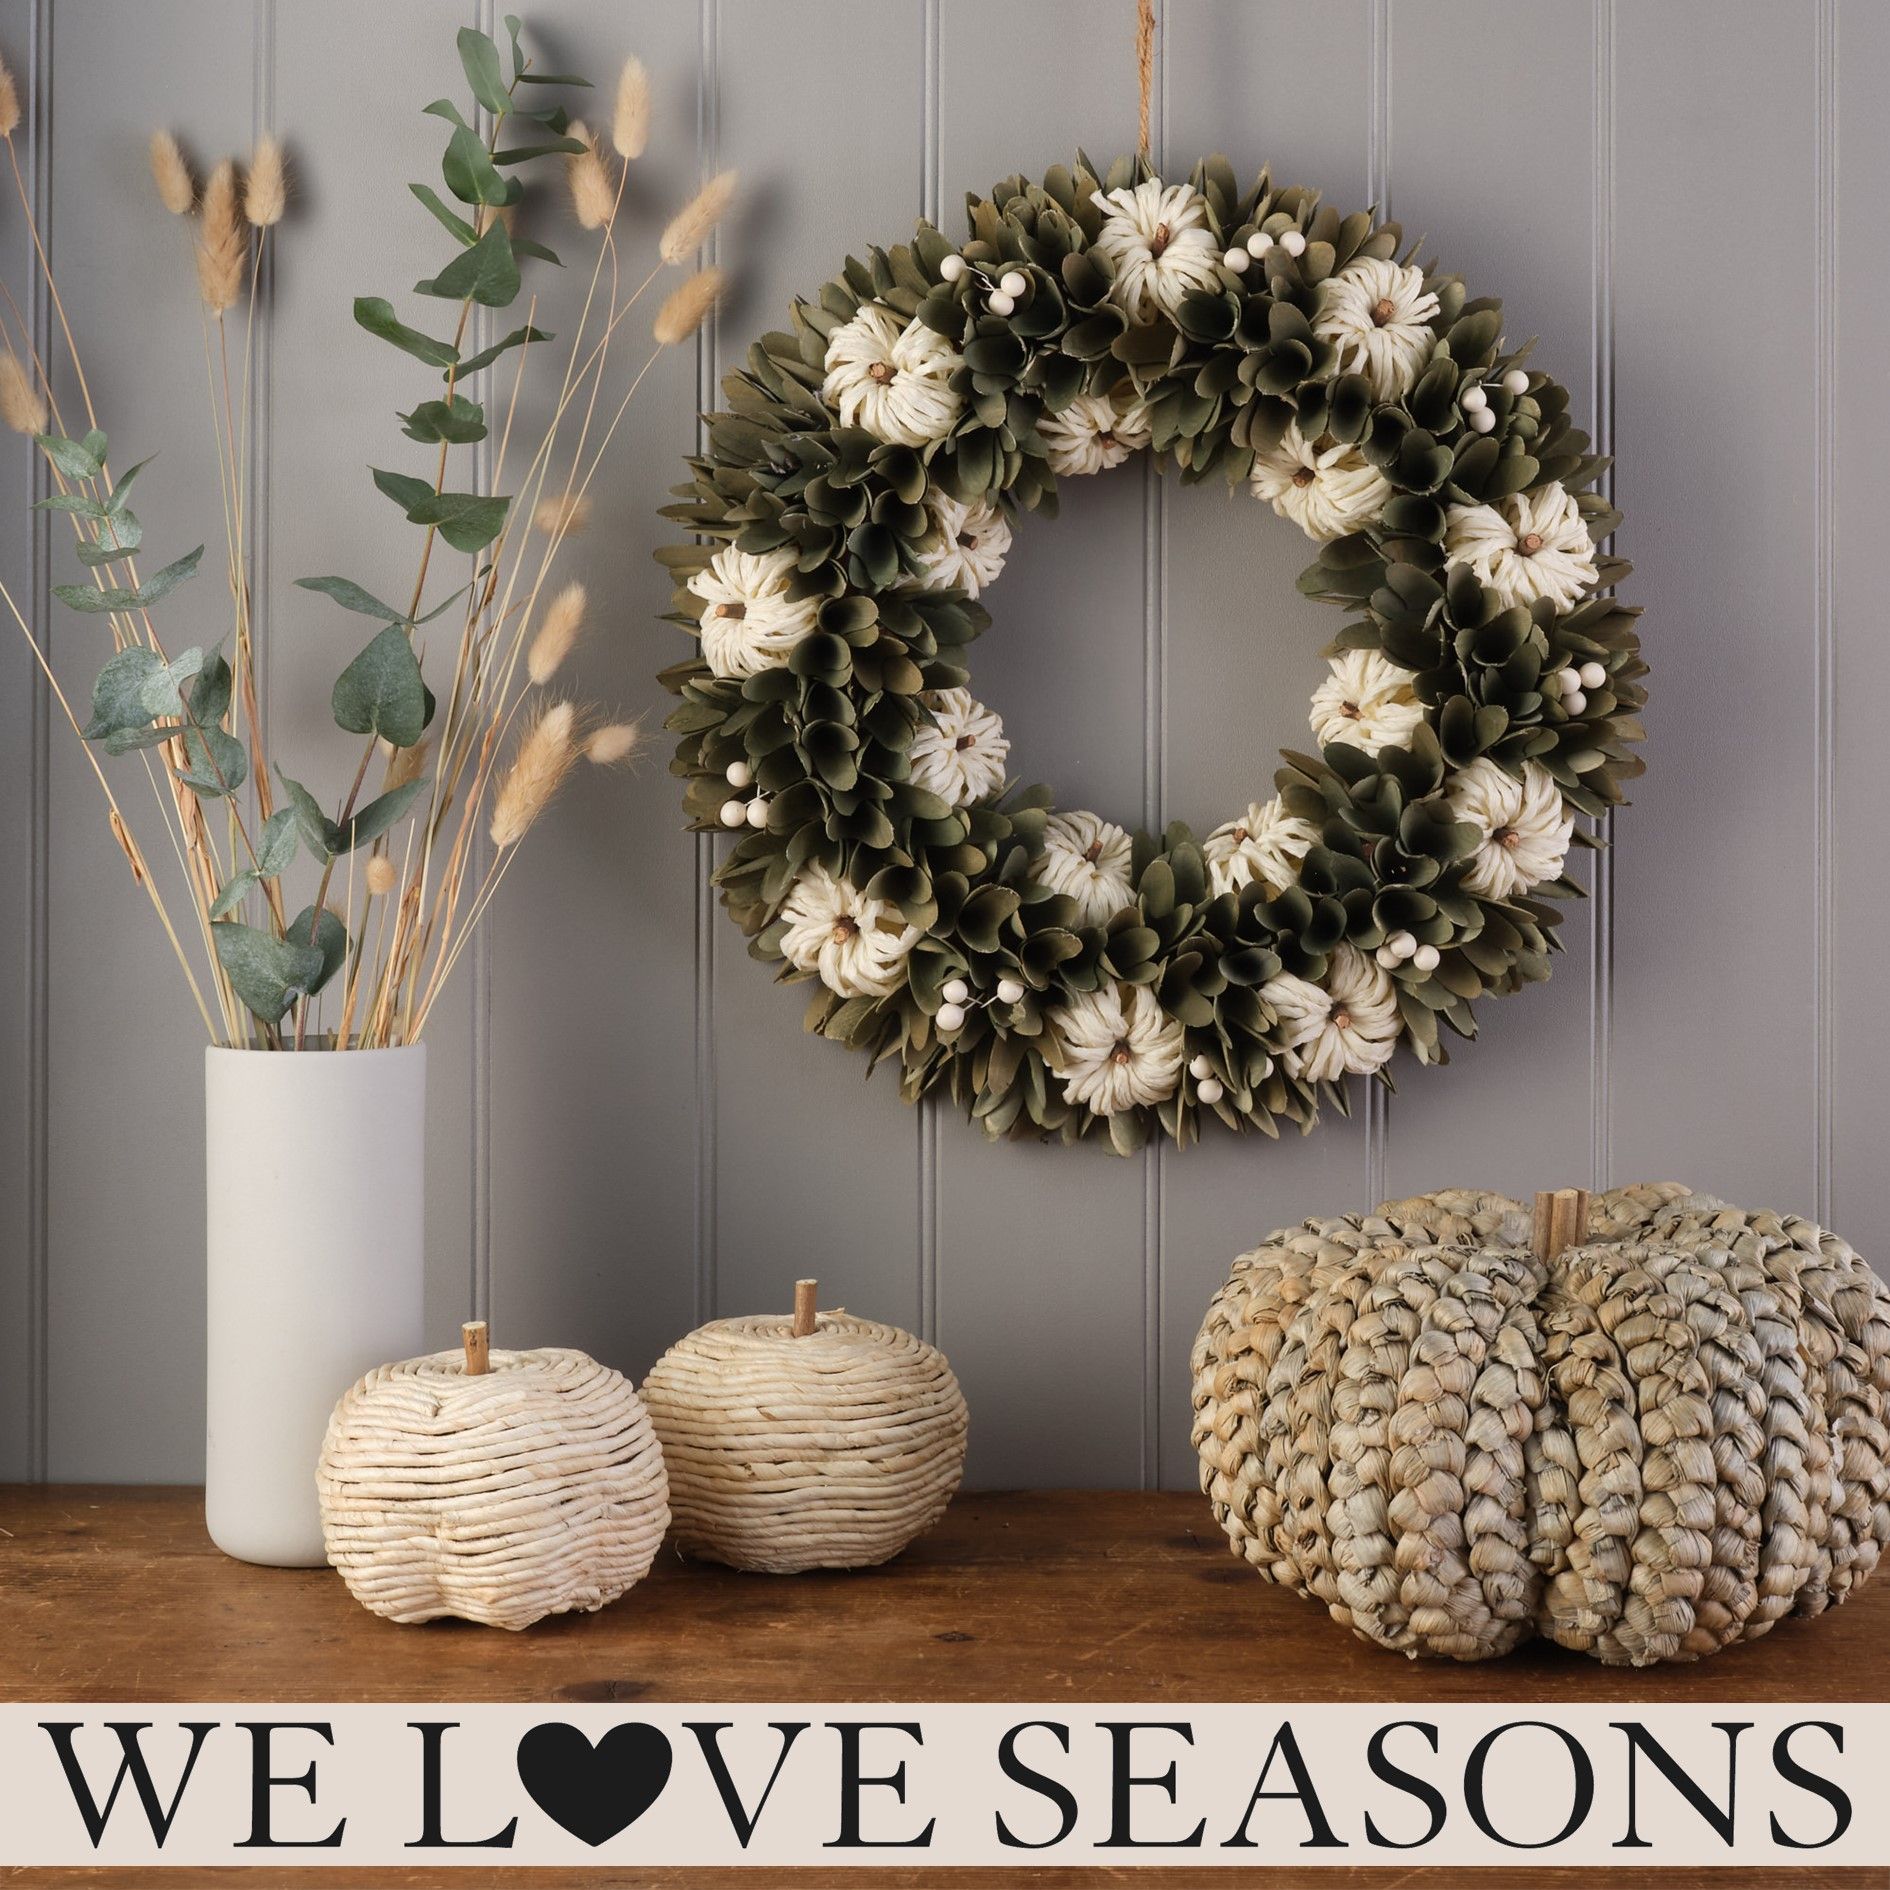 We Love Seasons Ltd